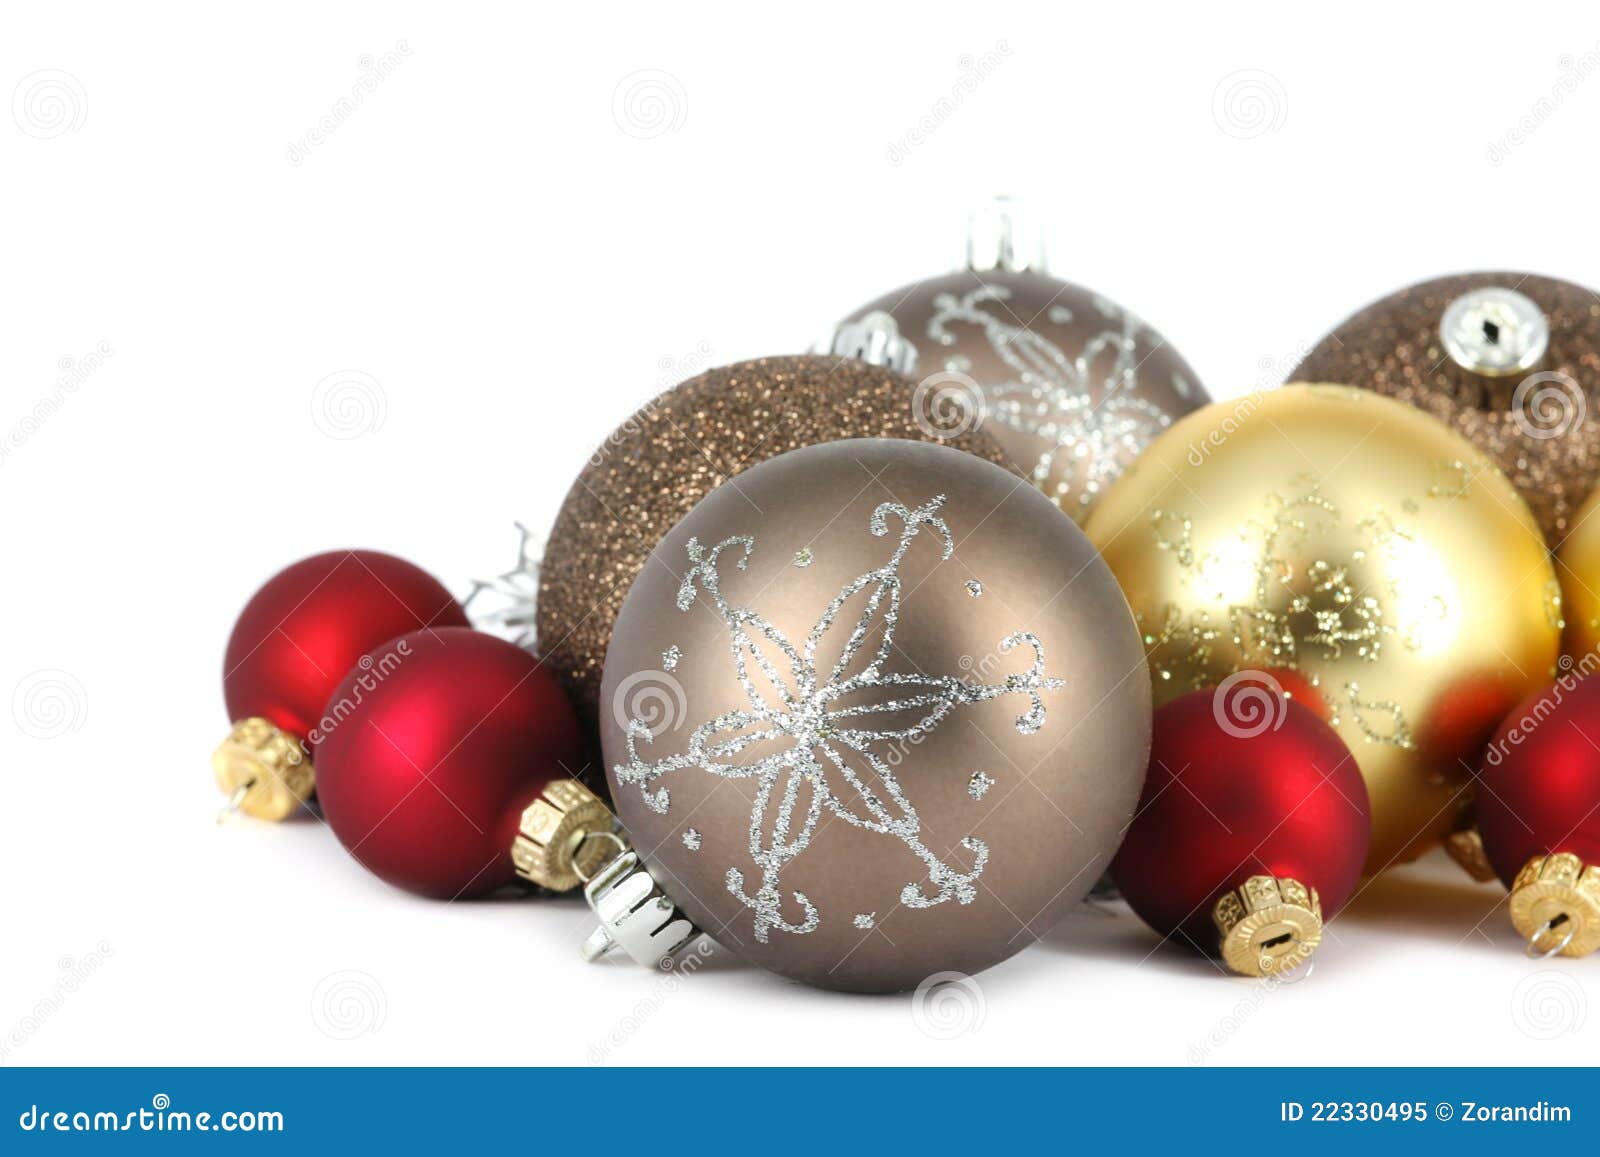 Merry Christmas Ball Decoration Stock Image - Image of celebrate ...